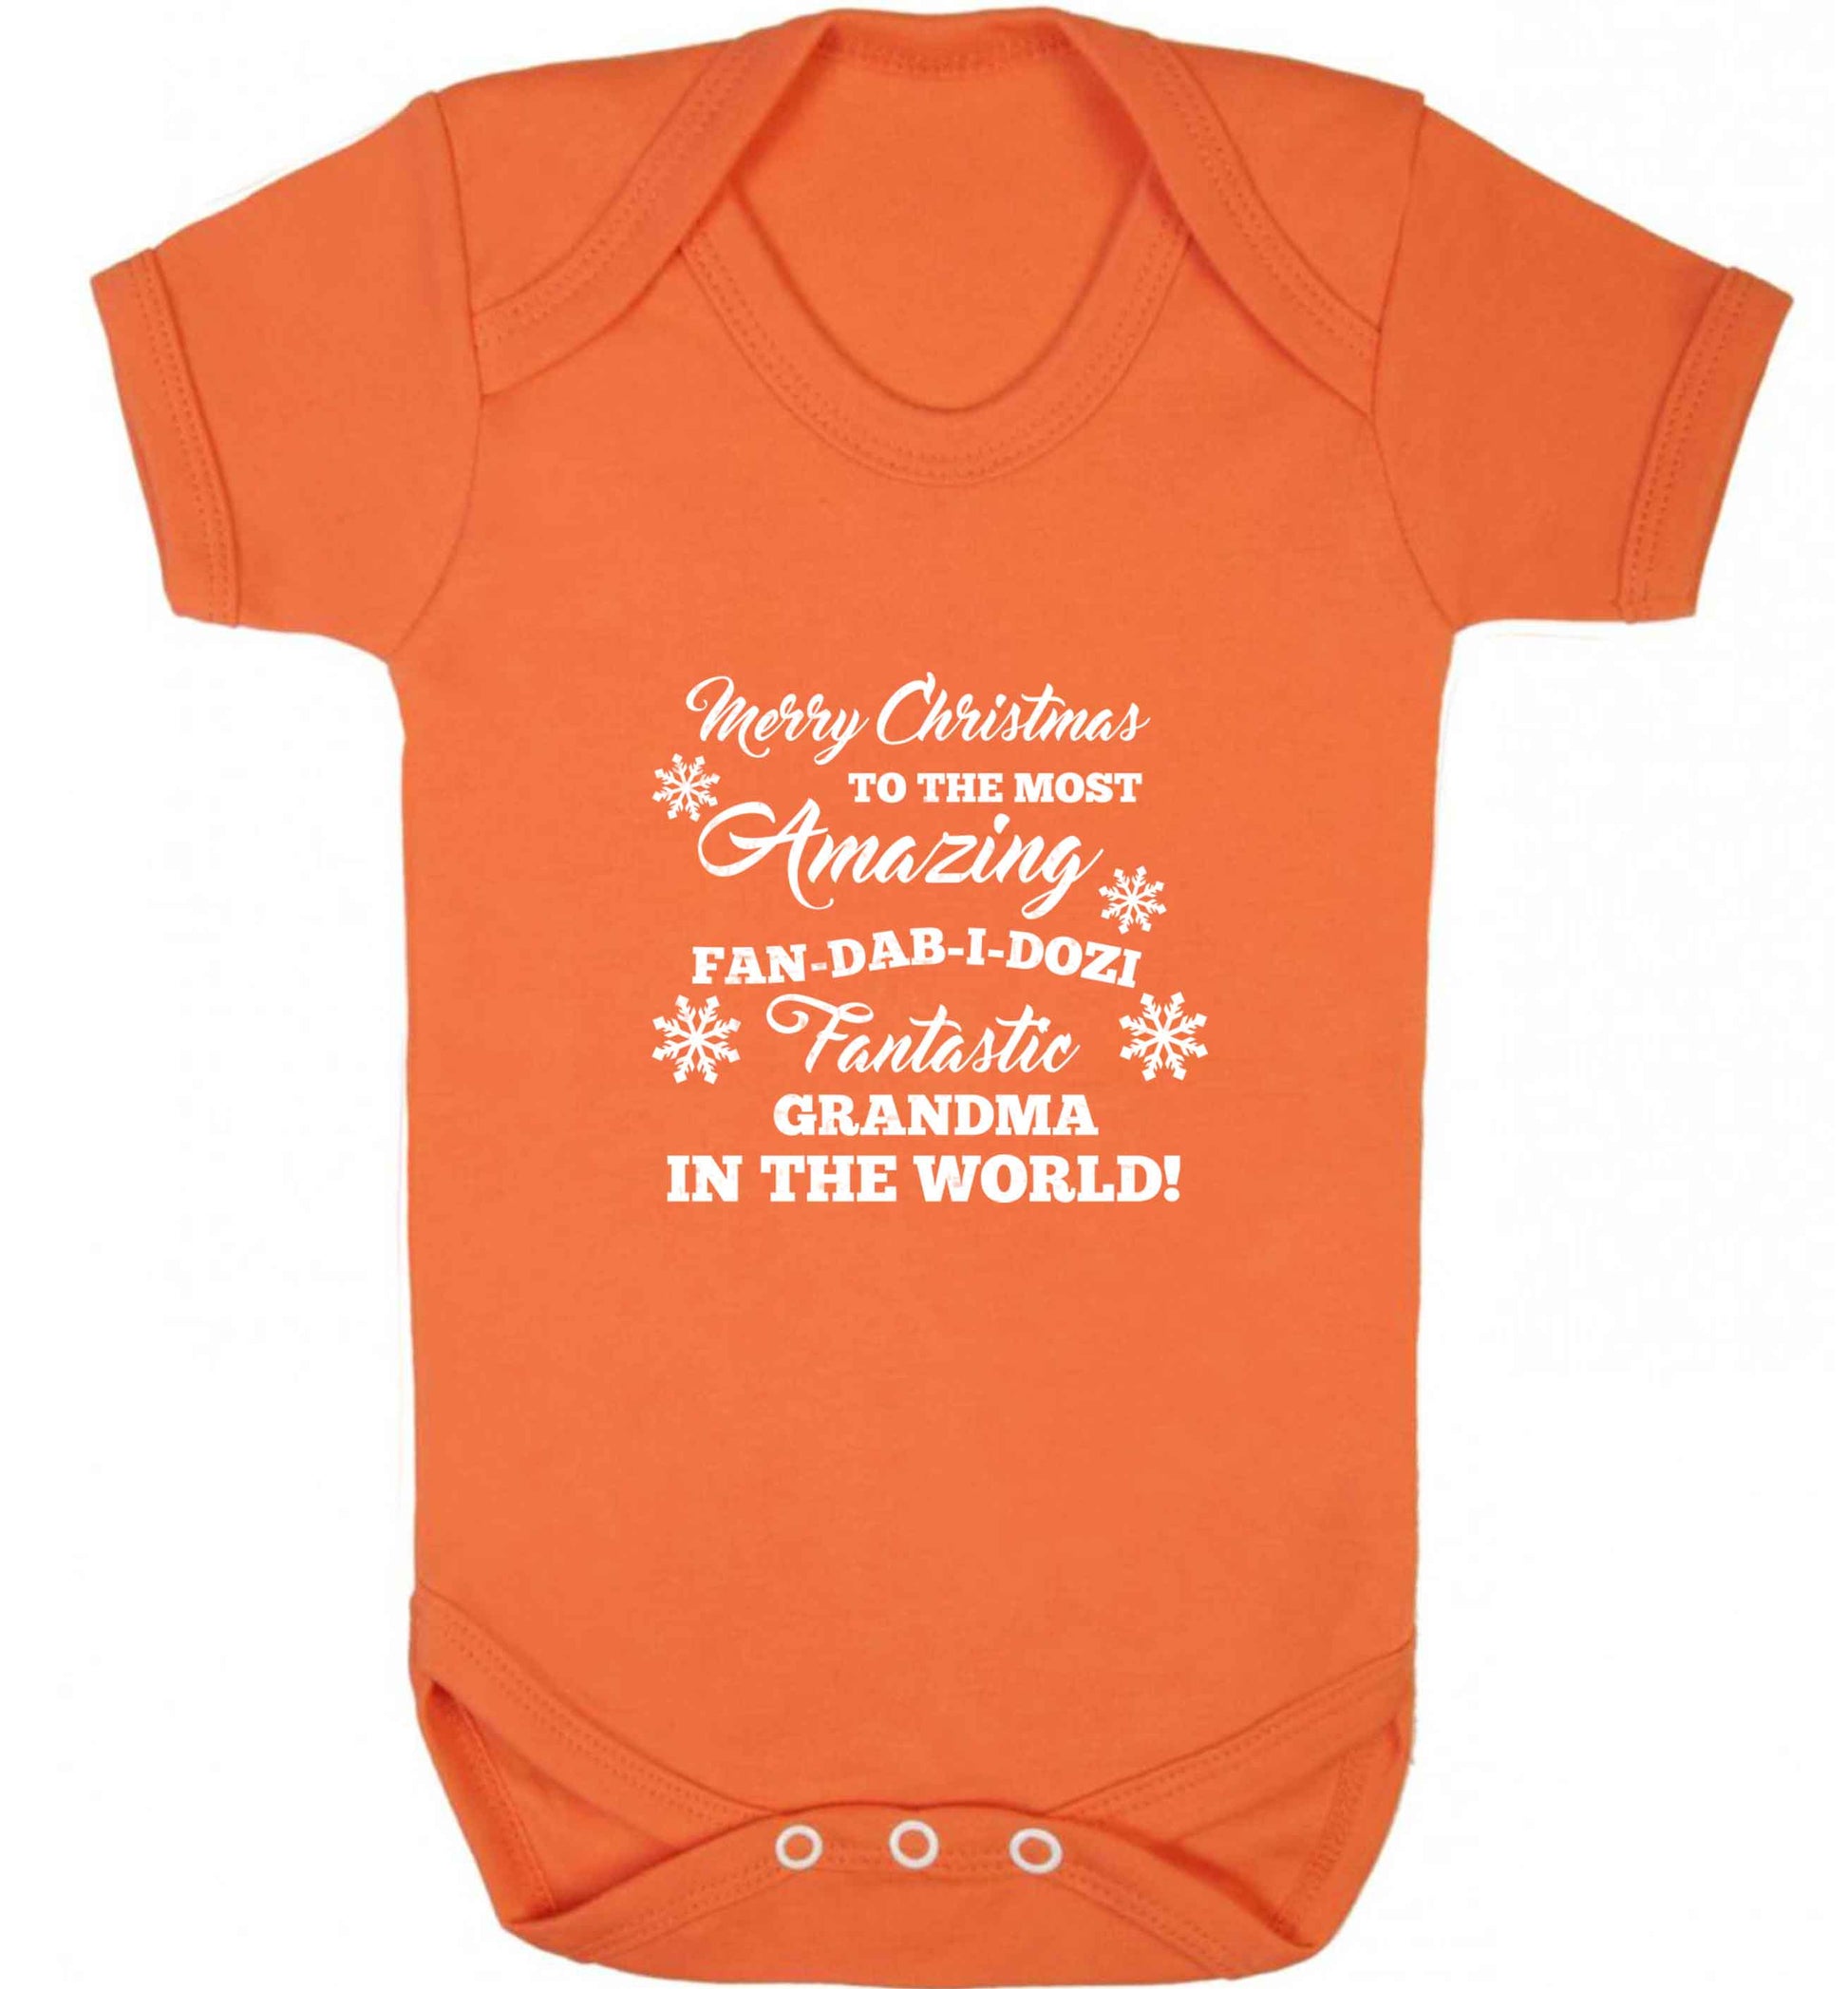 Merry Christmas to the most amazing fan-dab-i-dozi fantasic Grandma in the world baby vest orange 18-24 months